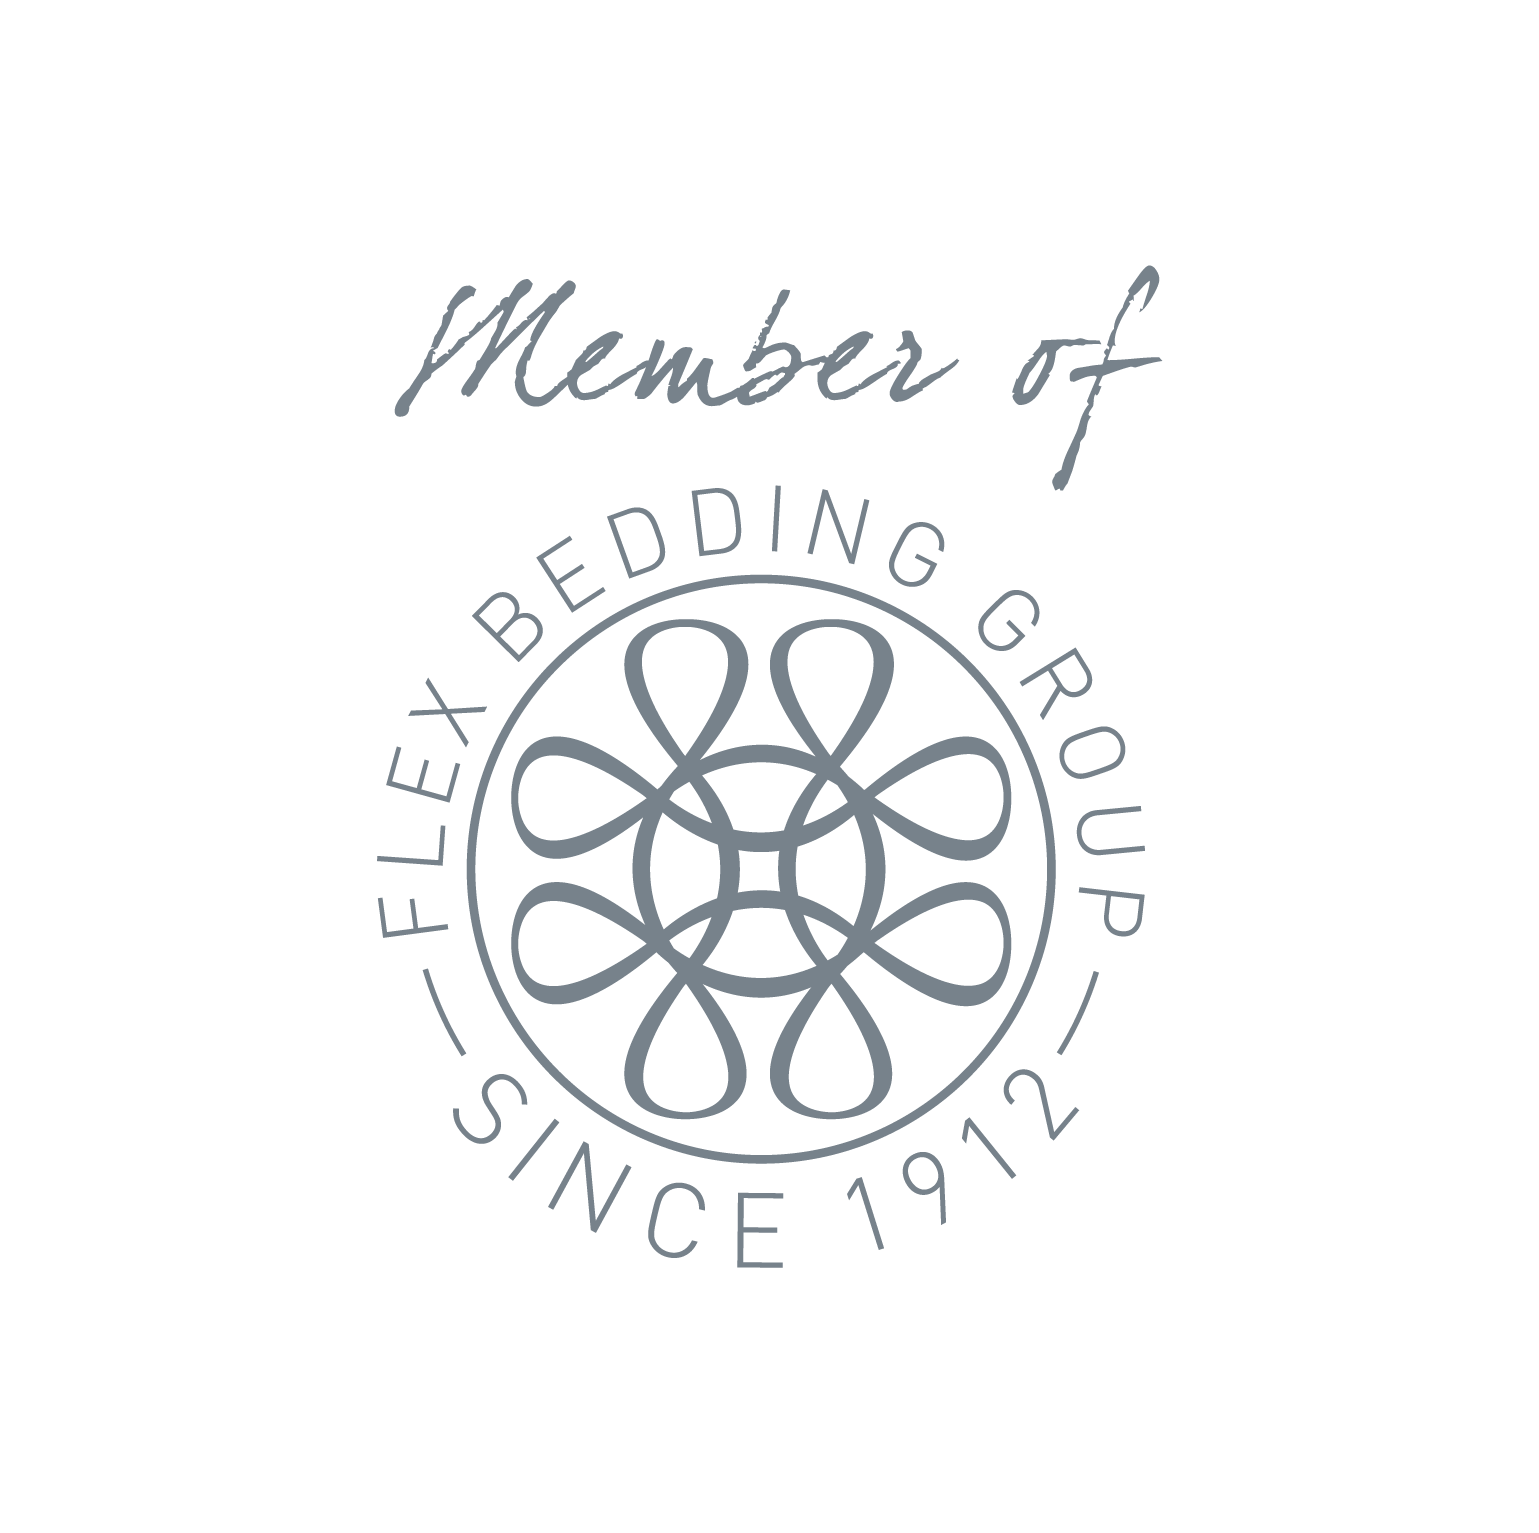 Logo flex Bedding Group